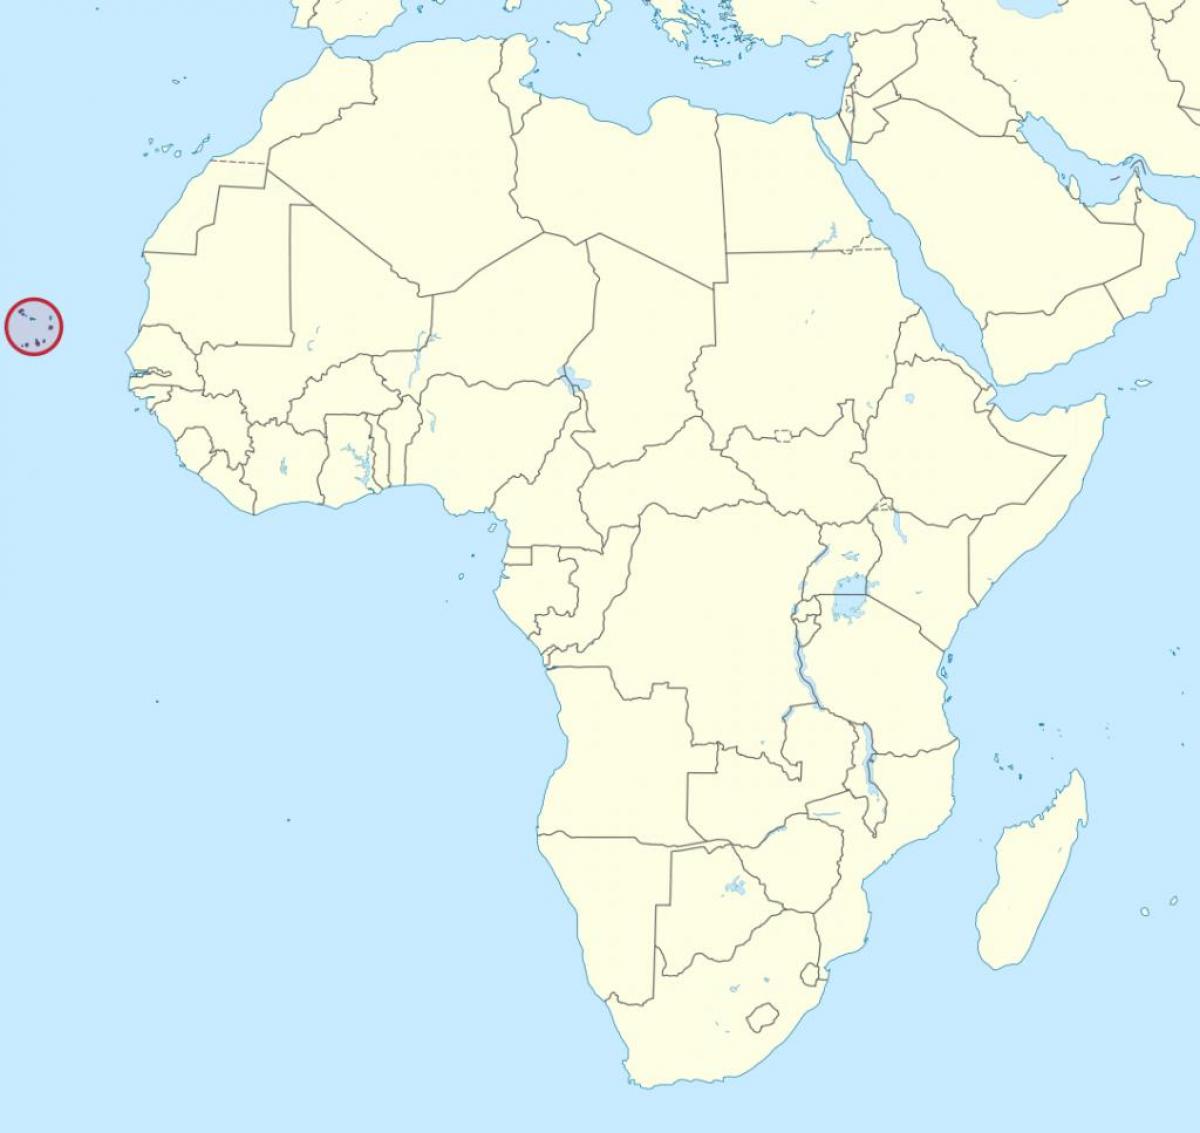 Kabo Verde africi mapu